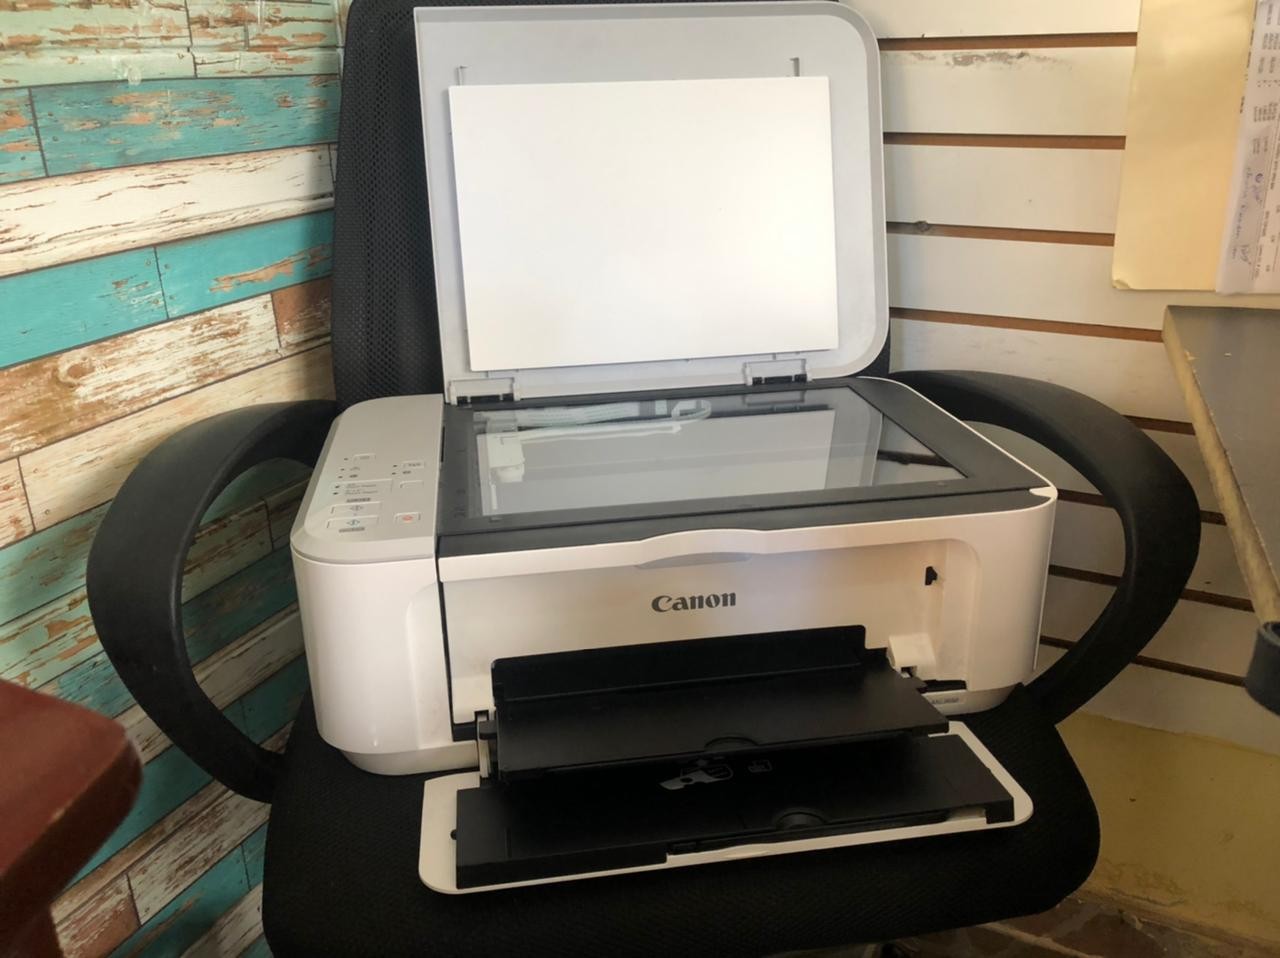 impresoras y scanners - Impresora Multifuncional Canon MG2110  0